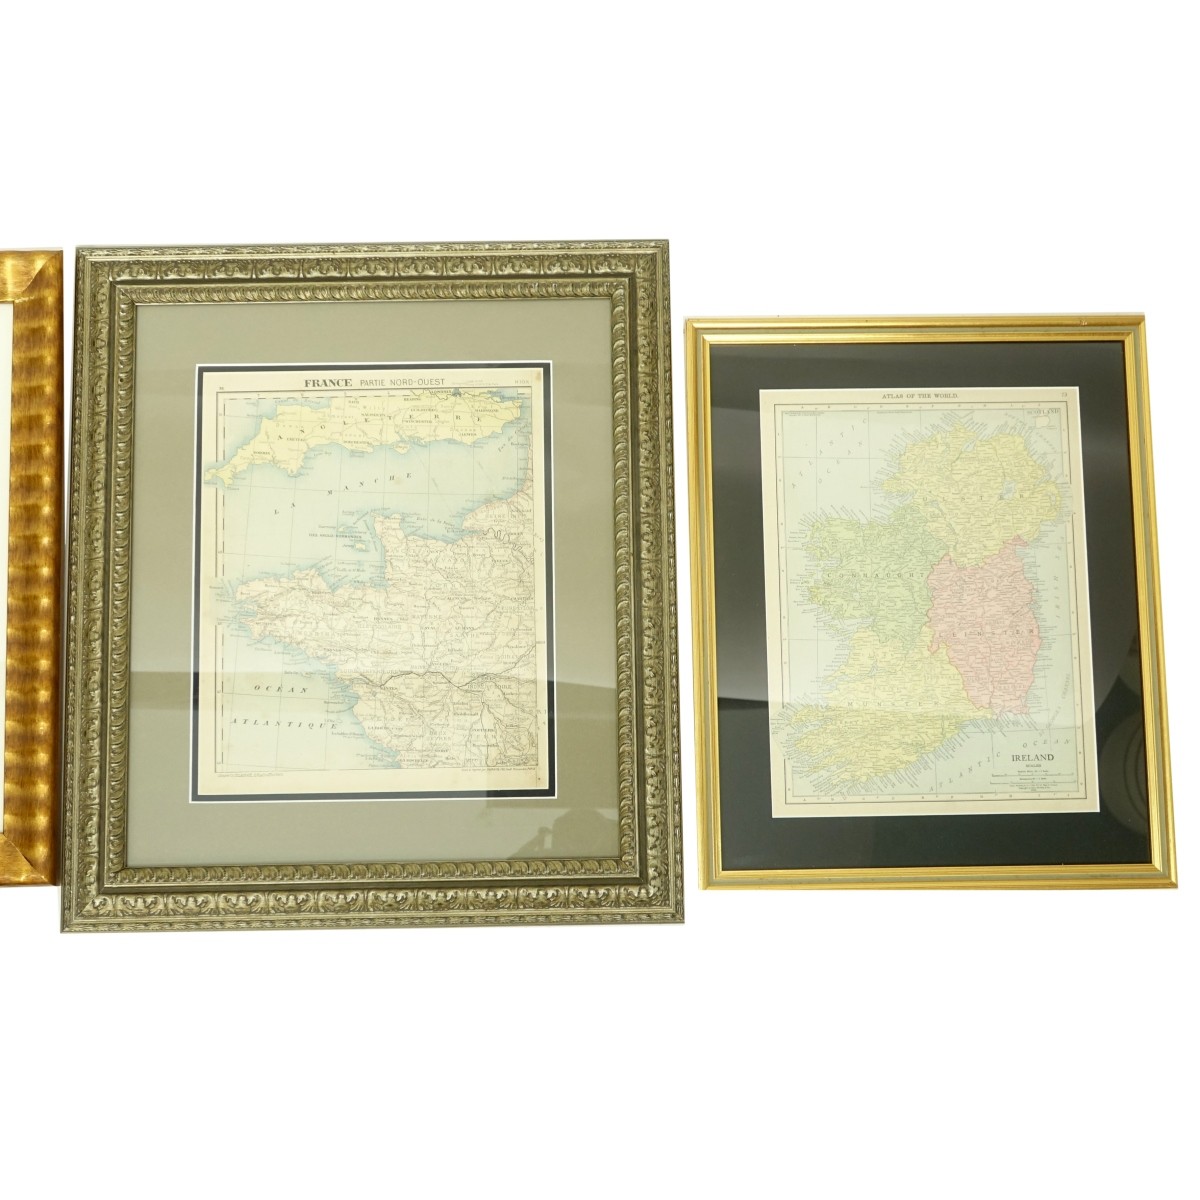 Six (6) Vintage Prints of Maps